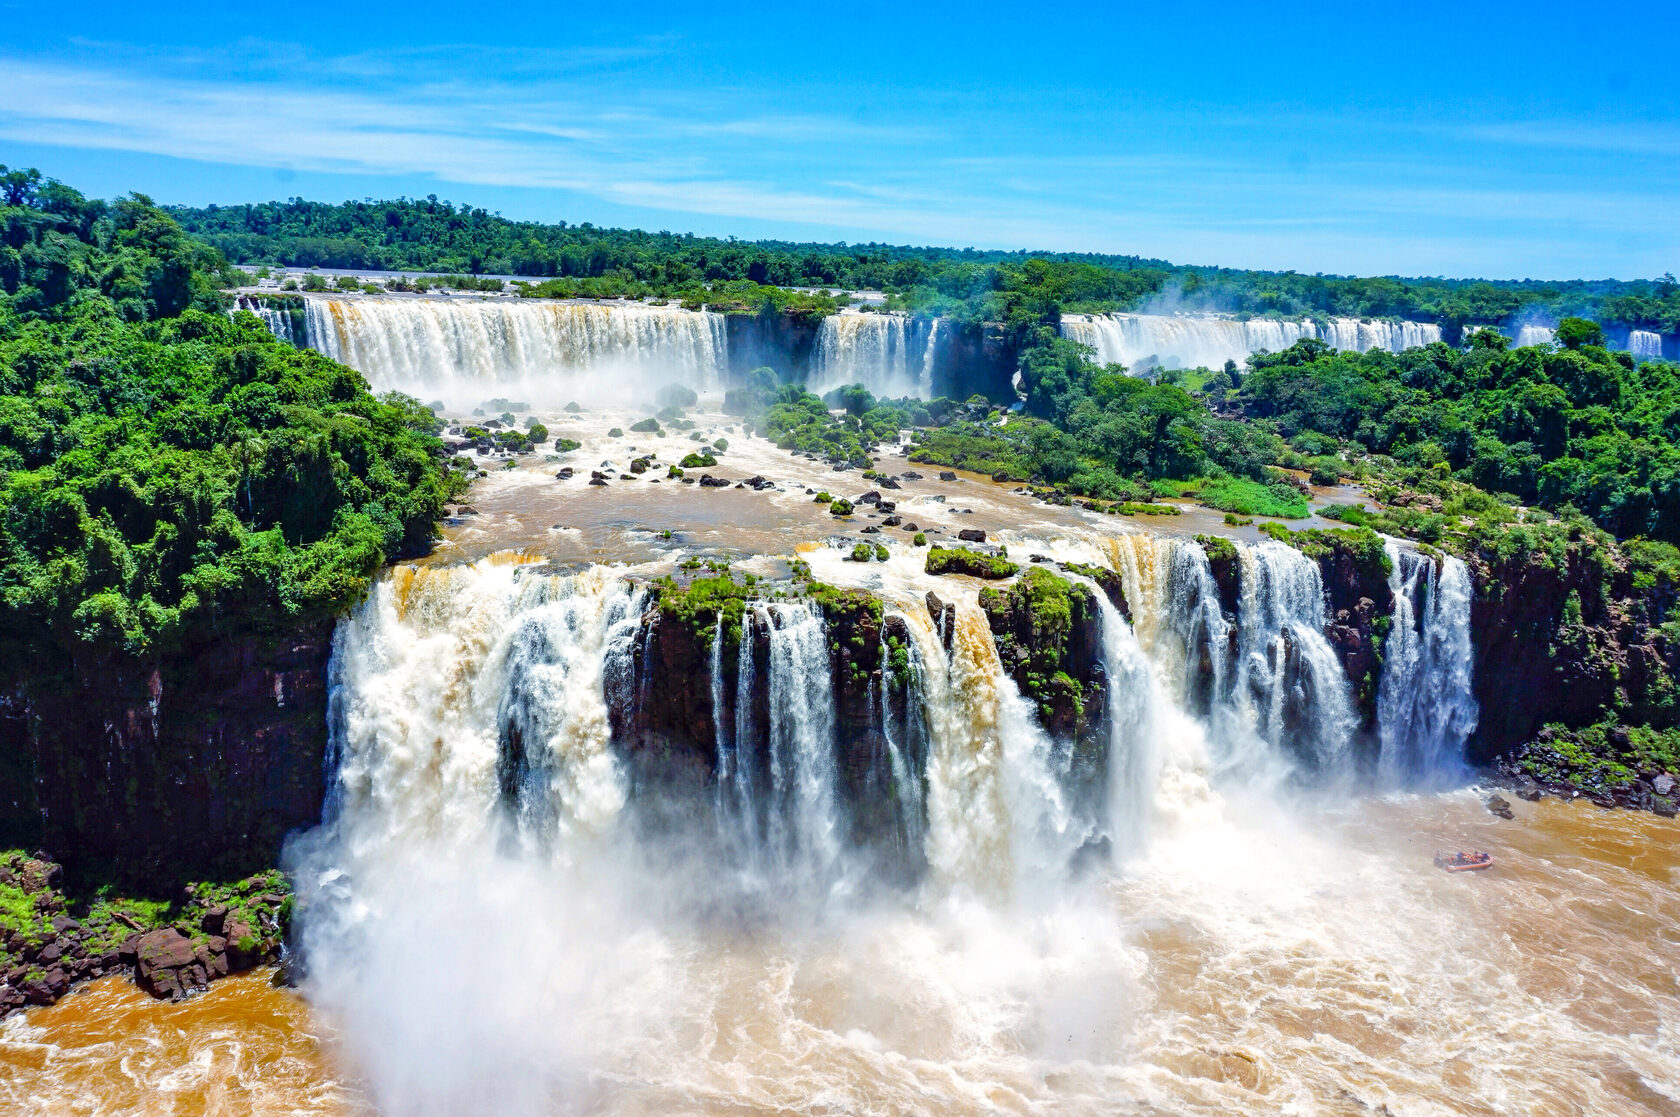 Аргентина достопримечательности водопады Игуасу